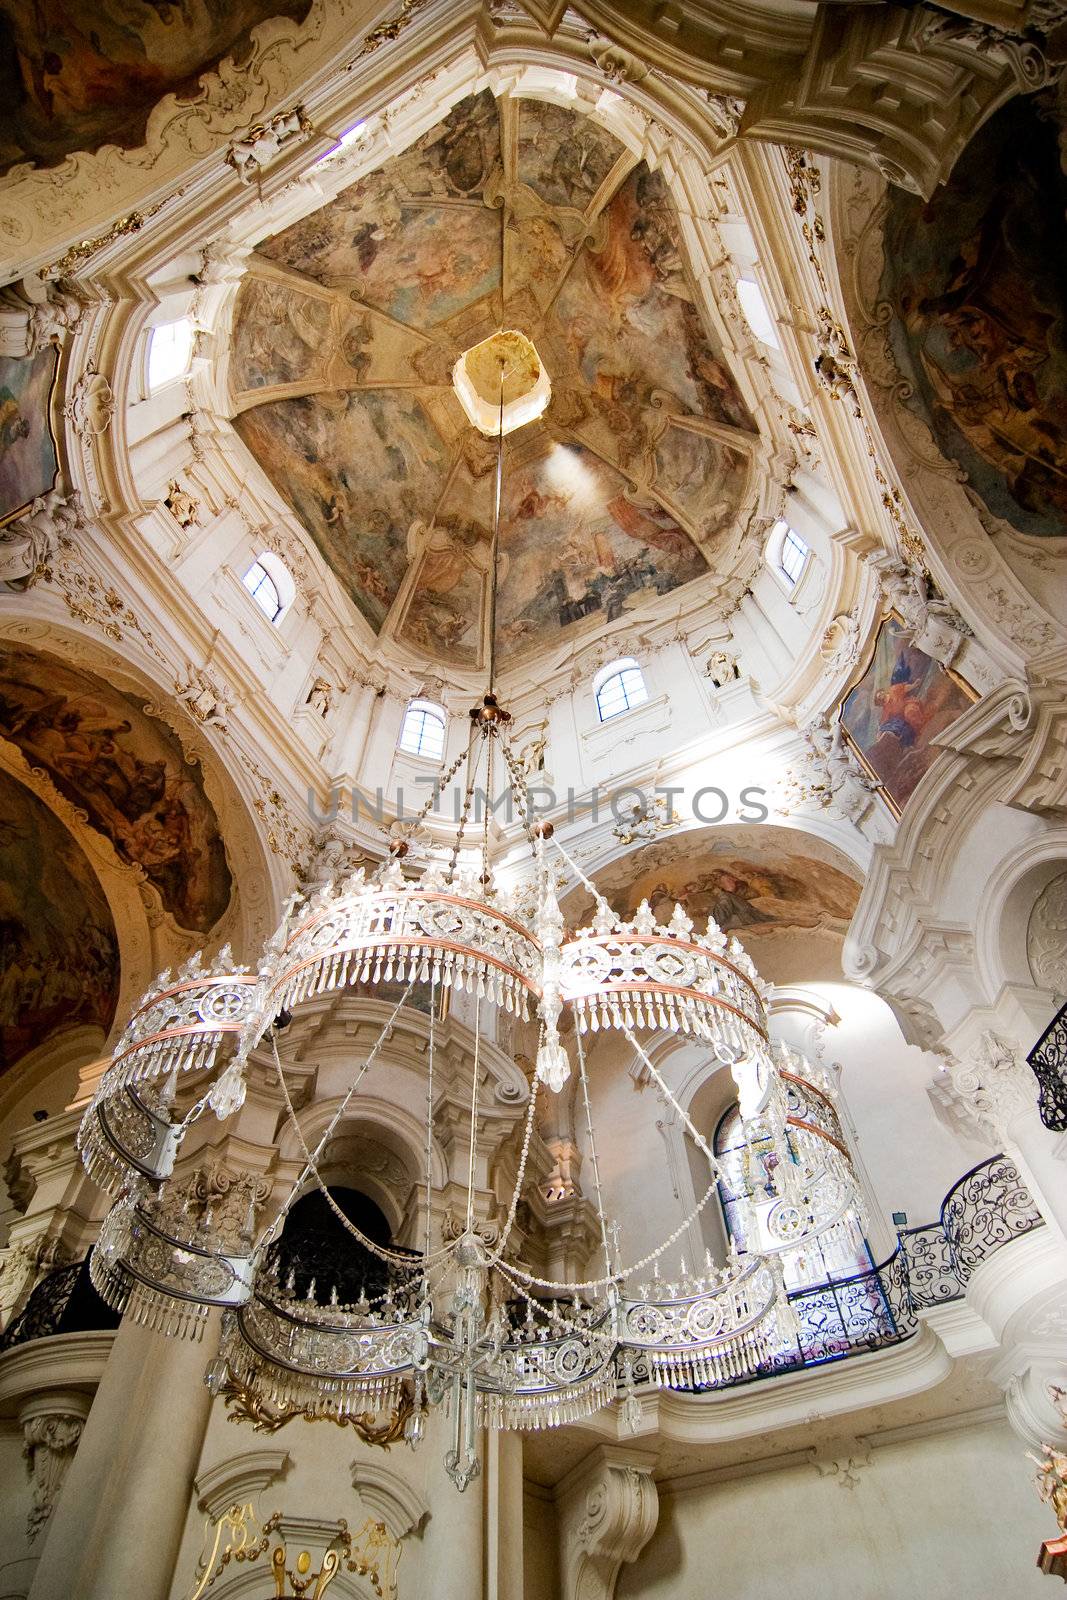 Rococo church ceiling, chandelier and fresco